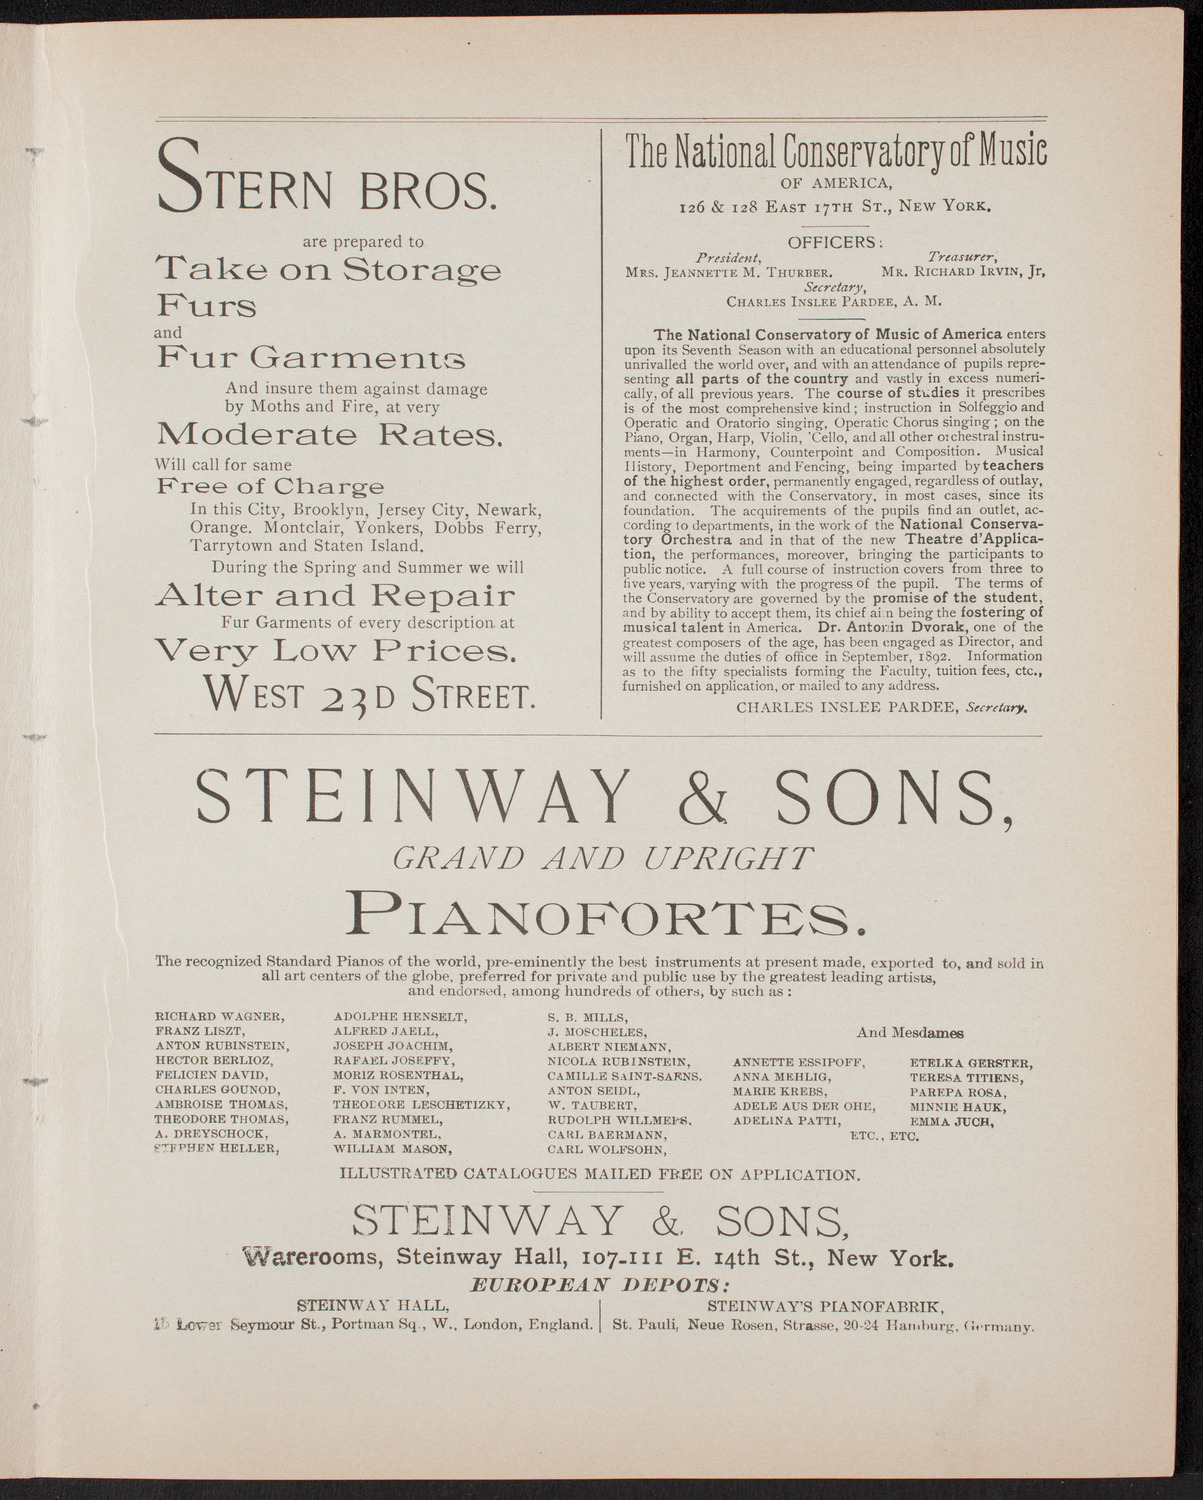 New York Symphony Orchestra: Handel Festival, April 28, 1892, program page 7